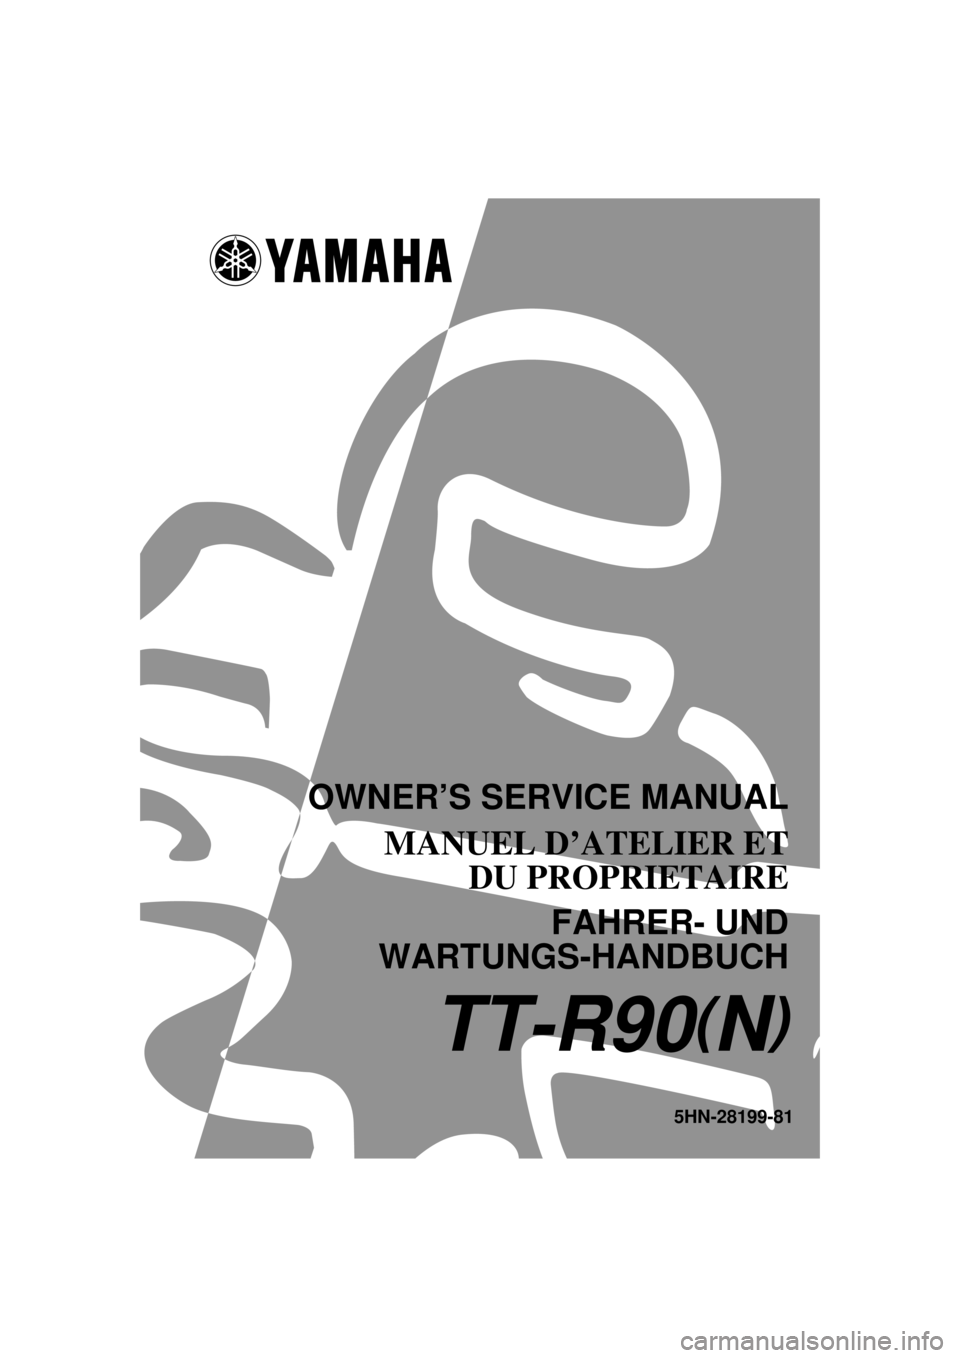 YAMAHA TTR90 2001  Owners Manual        
5HN-28199-81
TT-R90(N)
OWNER’S SERVICE MANUAL
MANUEL D’ATELIER ET
DU PROPRIETAIRE
FAHRER- UND
WARTUNGS-HANDBUCH
TED IN JAPAN
· 5 - 2.0 ´ 1 CR
TT-R90
(N
) 